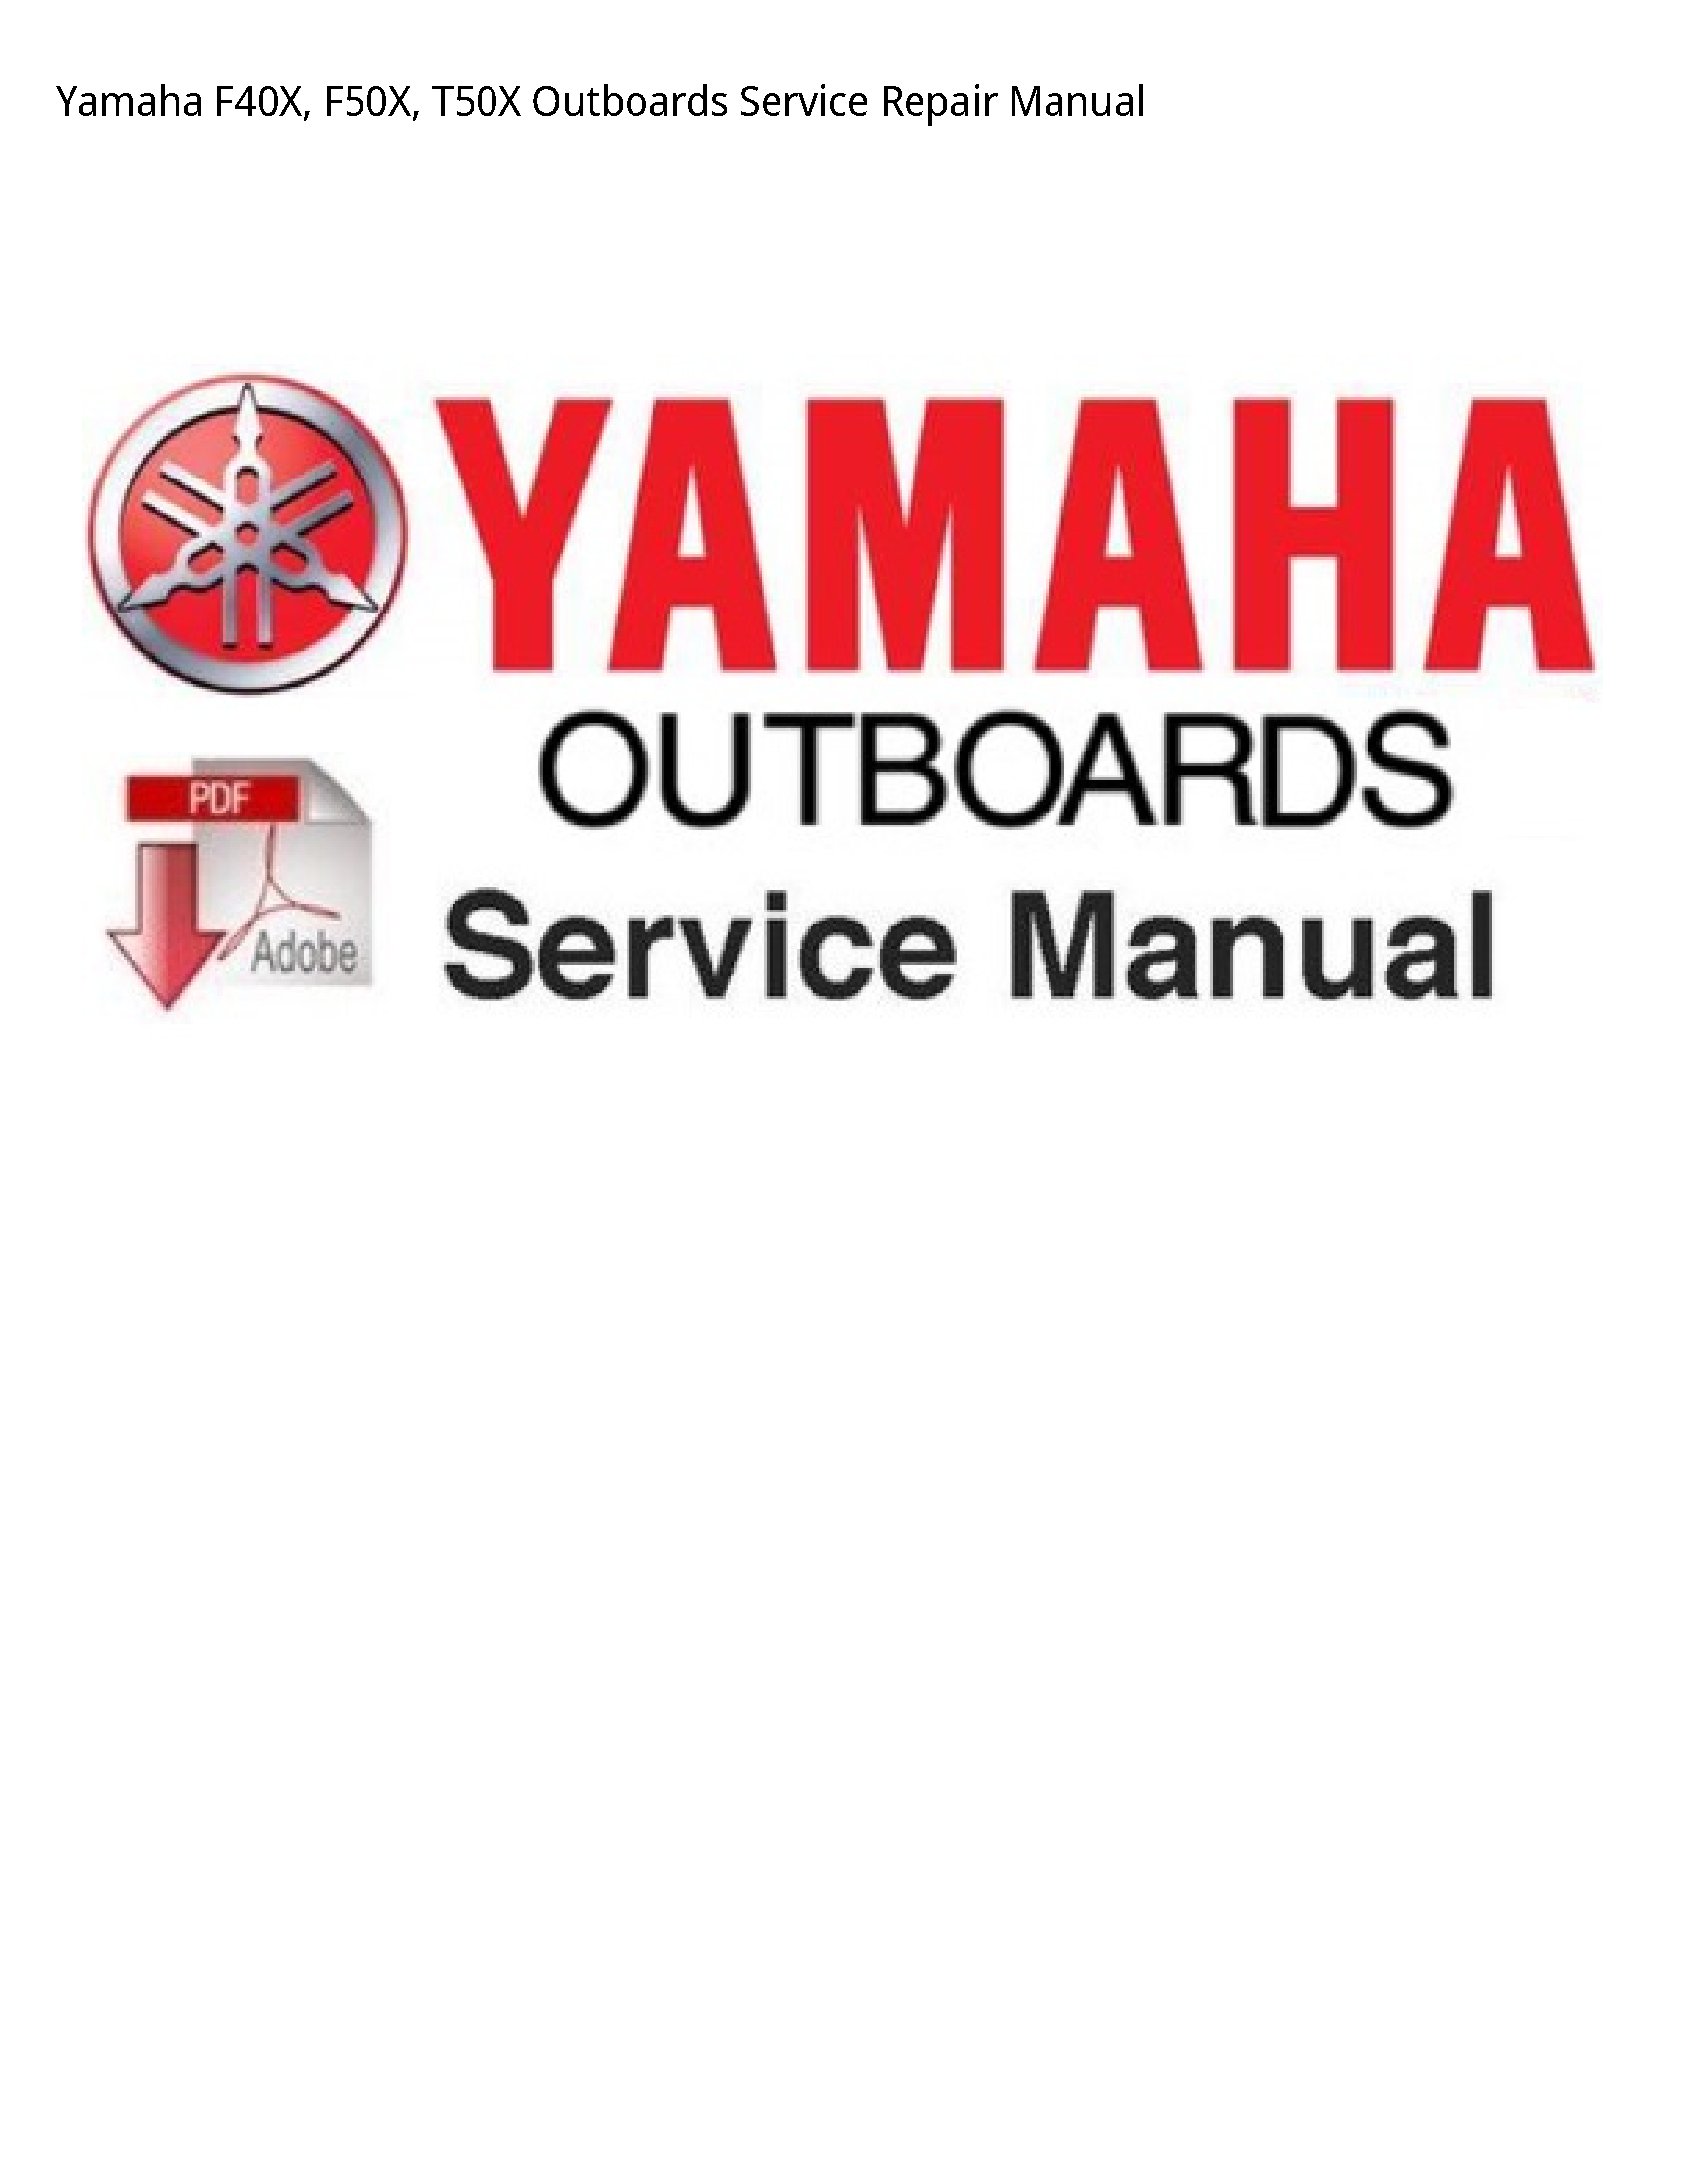 Yamaha F40X Outboards manual